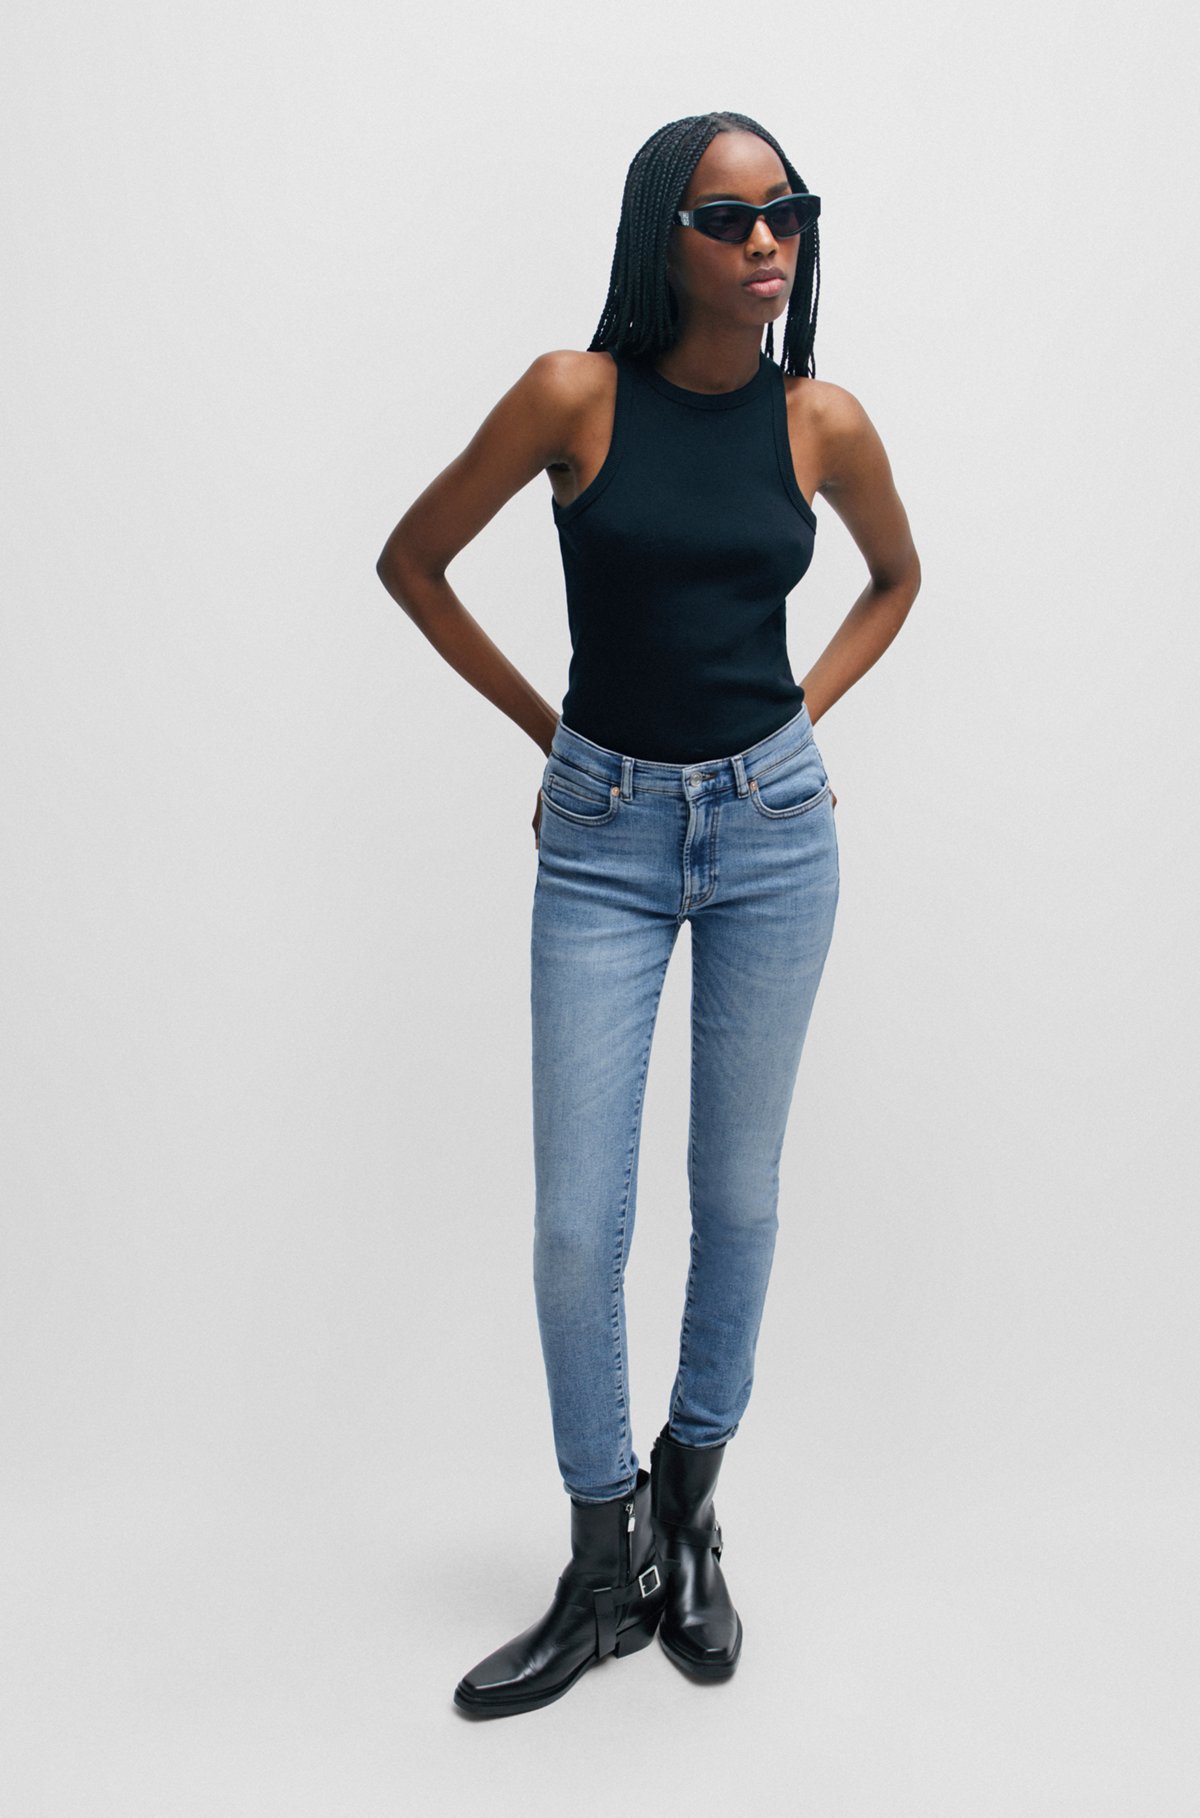 HUGO - Skinny-fit jeans in blue stretch denim